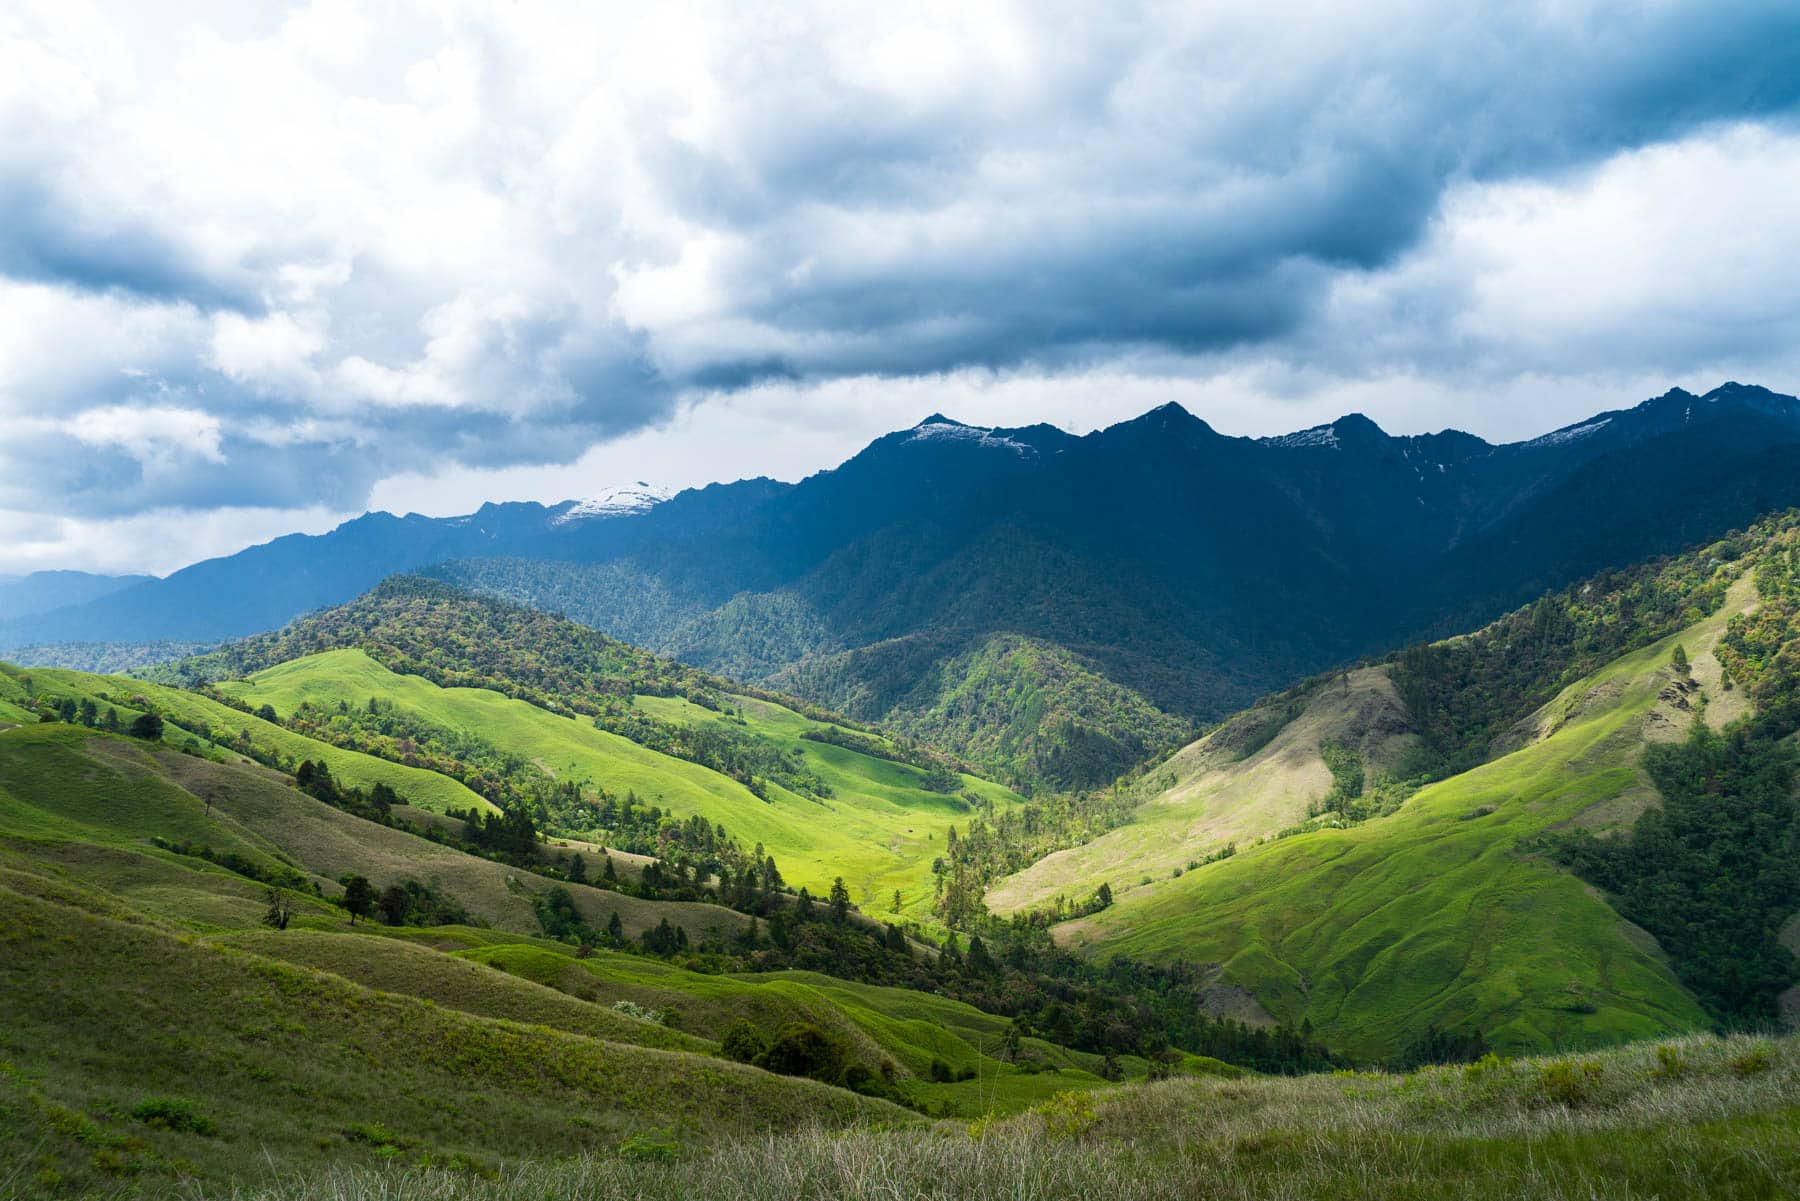 Mountains in Mechuka, Arunachal Pradesh, India